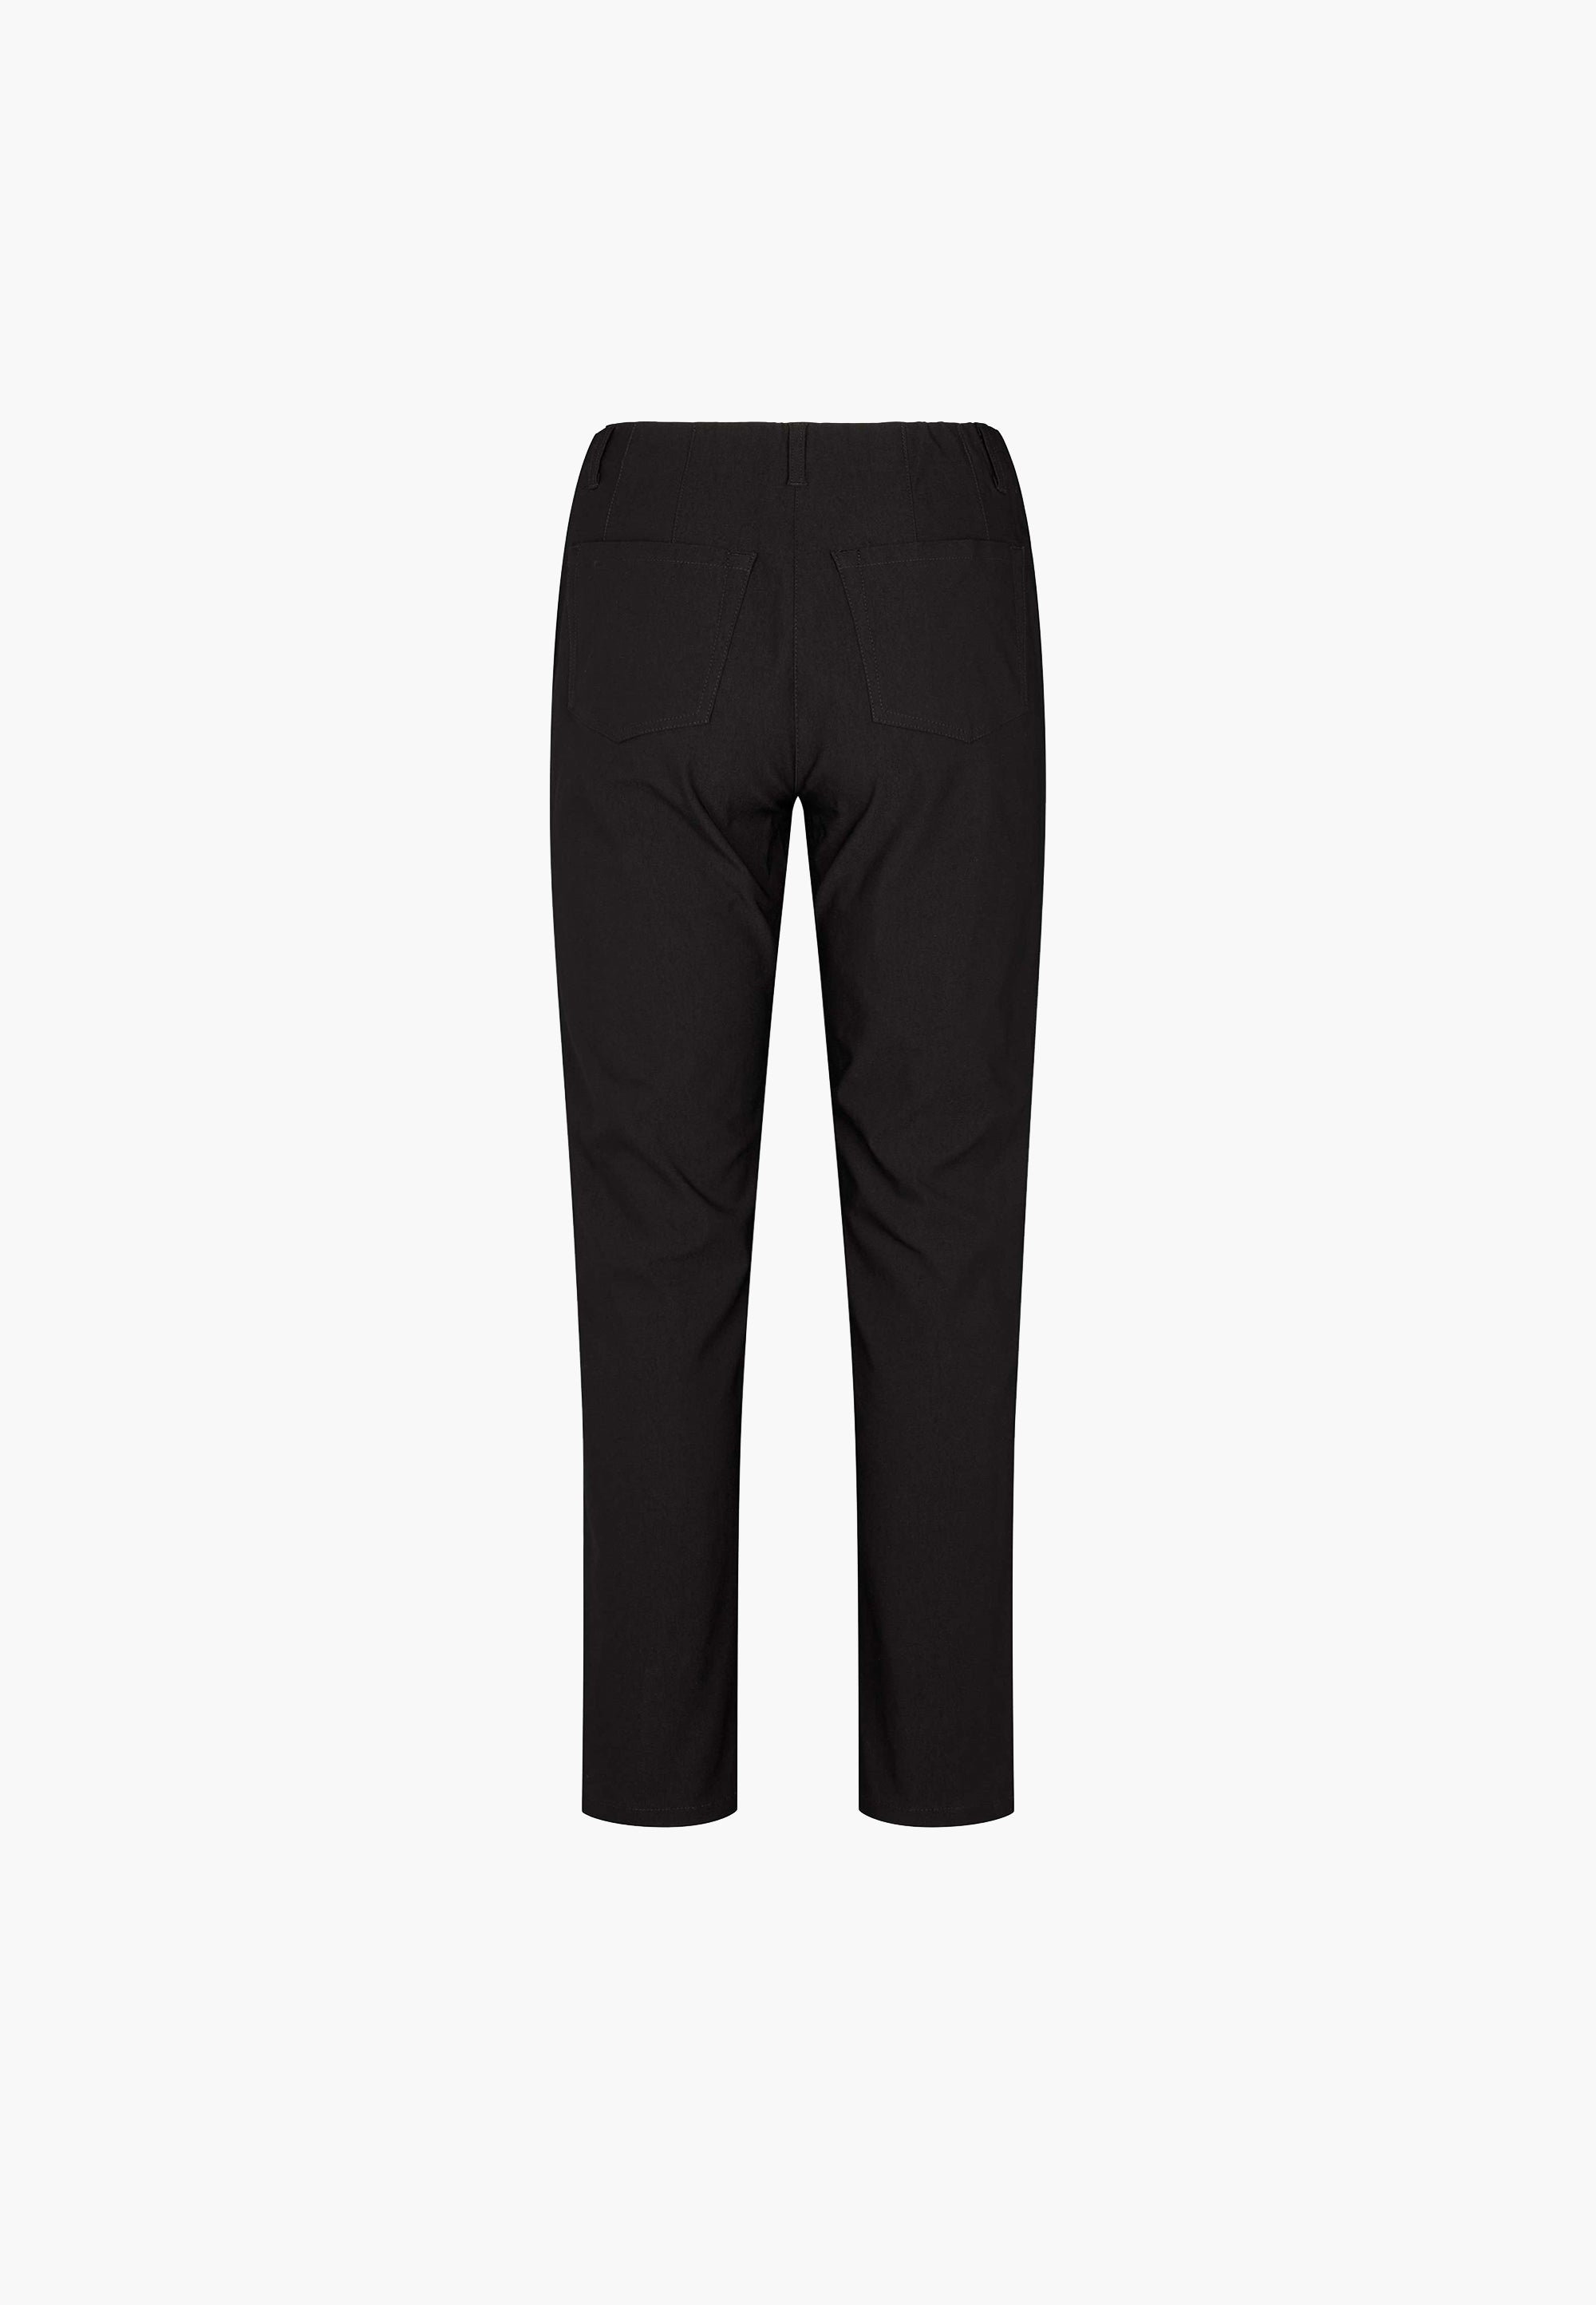 LAURIE  Rylie Pocket Regular - Medium Length Trousers REGULAR 99971 Black Brushed